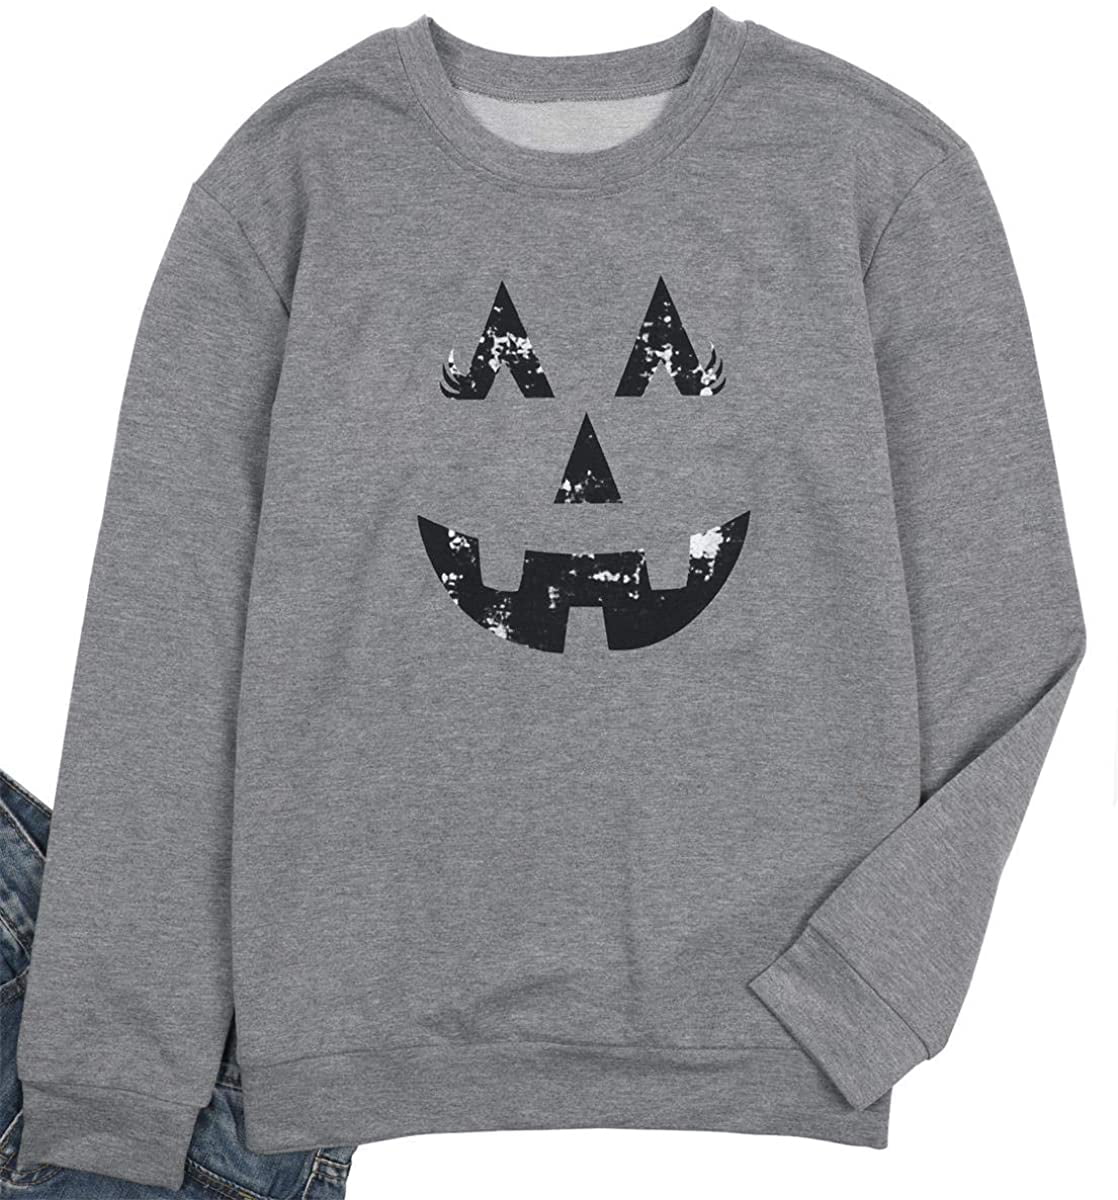 Long Sleeve Pullover Pumpkin Face Printed Sweater Blouses Shirts Portazai Sweatshirts for Women Happy Halloween Tops 